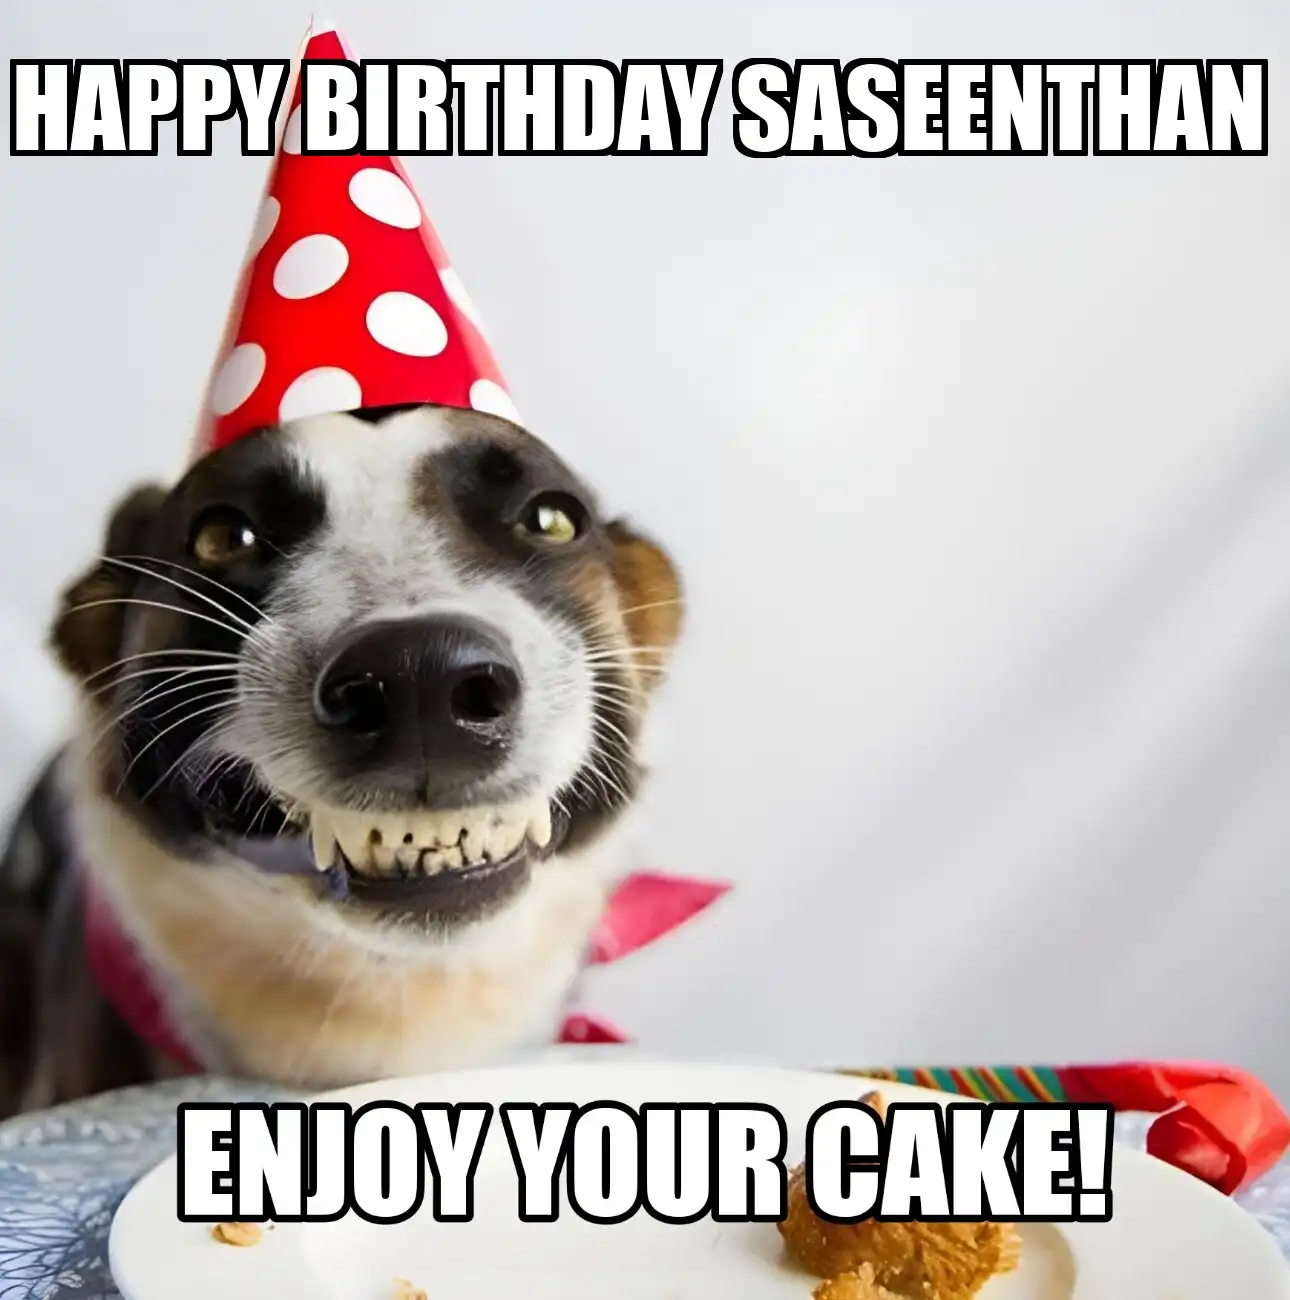 Happy Birthday Saseenthan Enjoy Your Cake Dog Meme